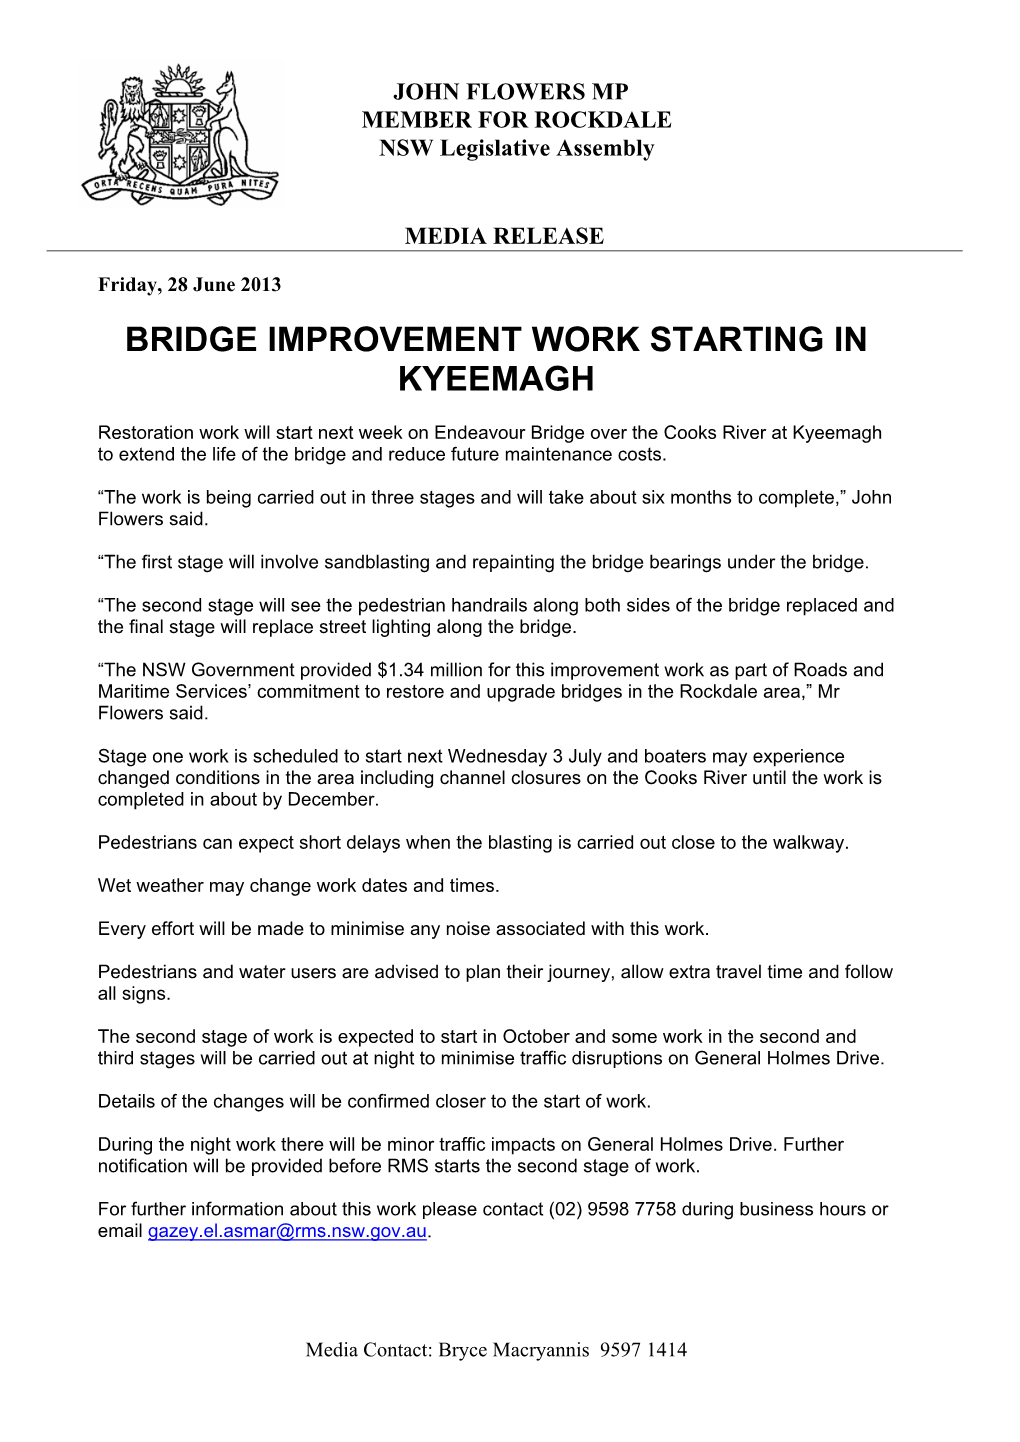 Bridge Improvement Work Starting in Kyeemagh